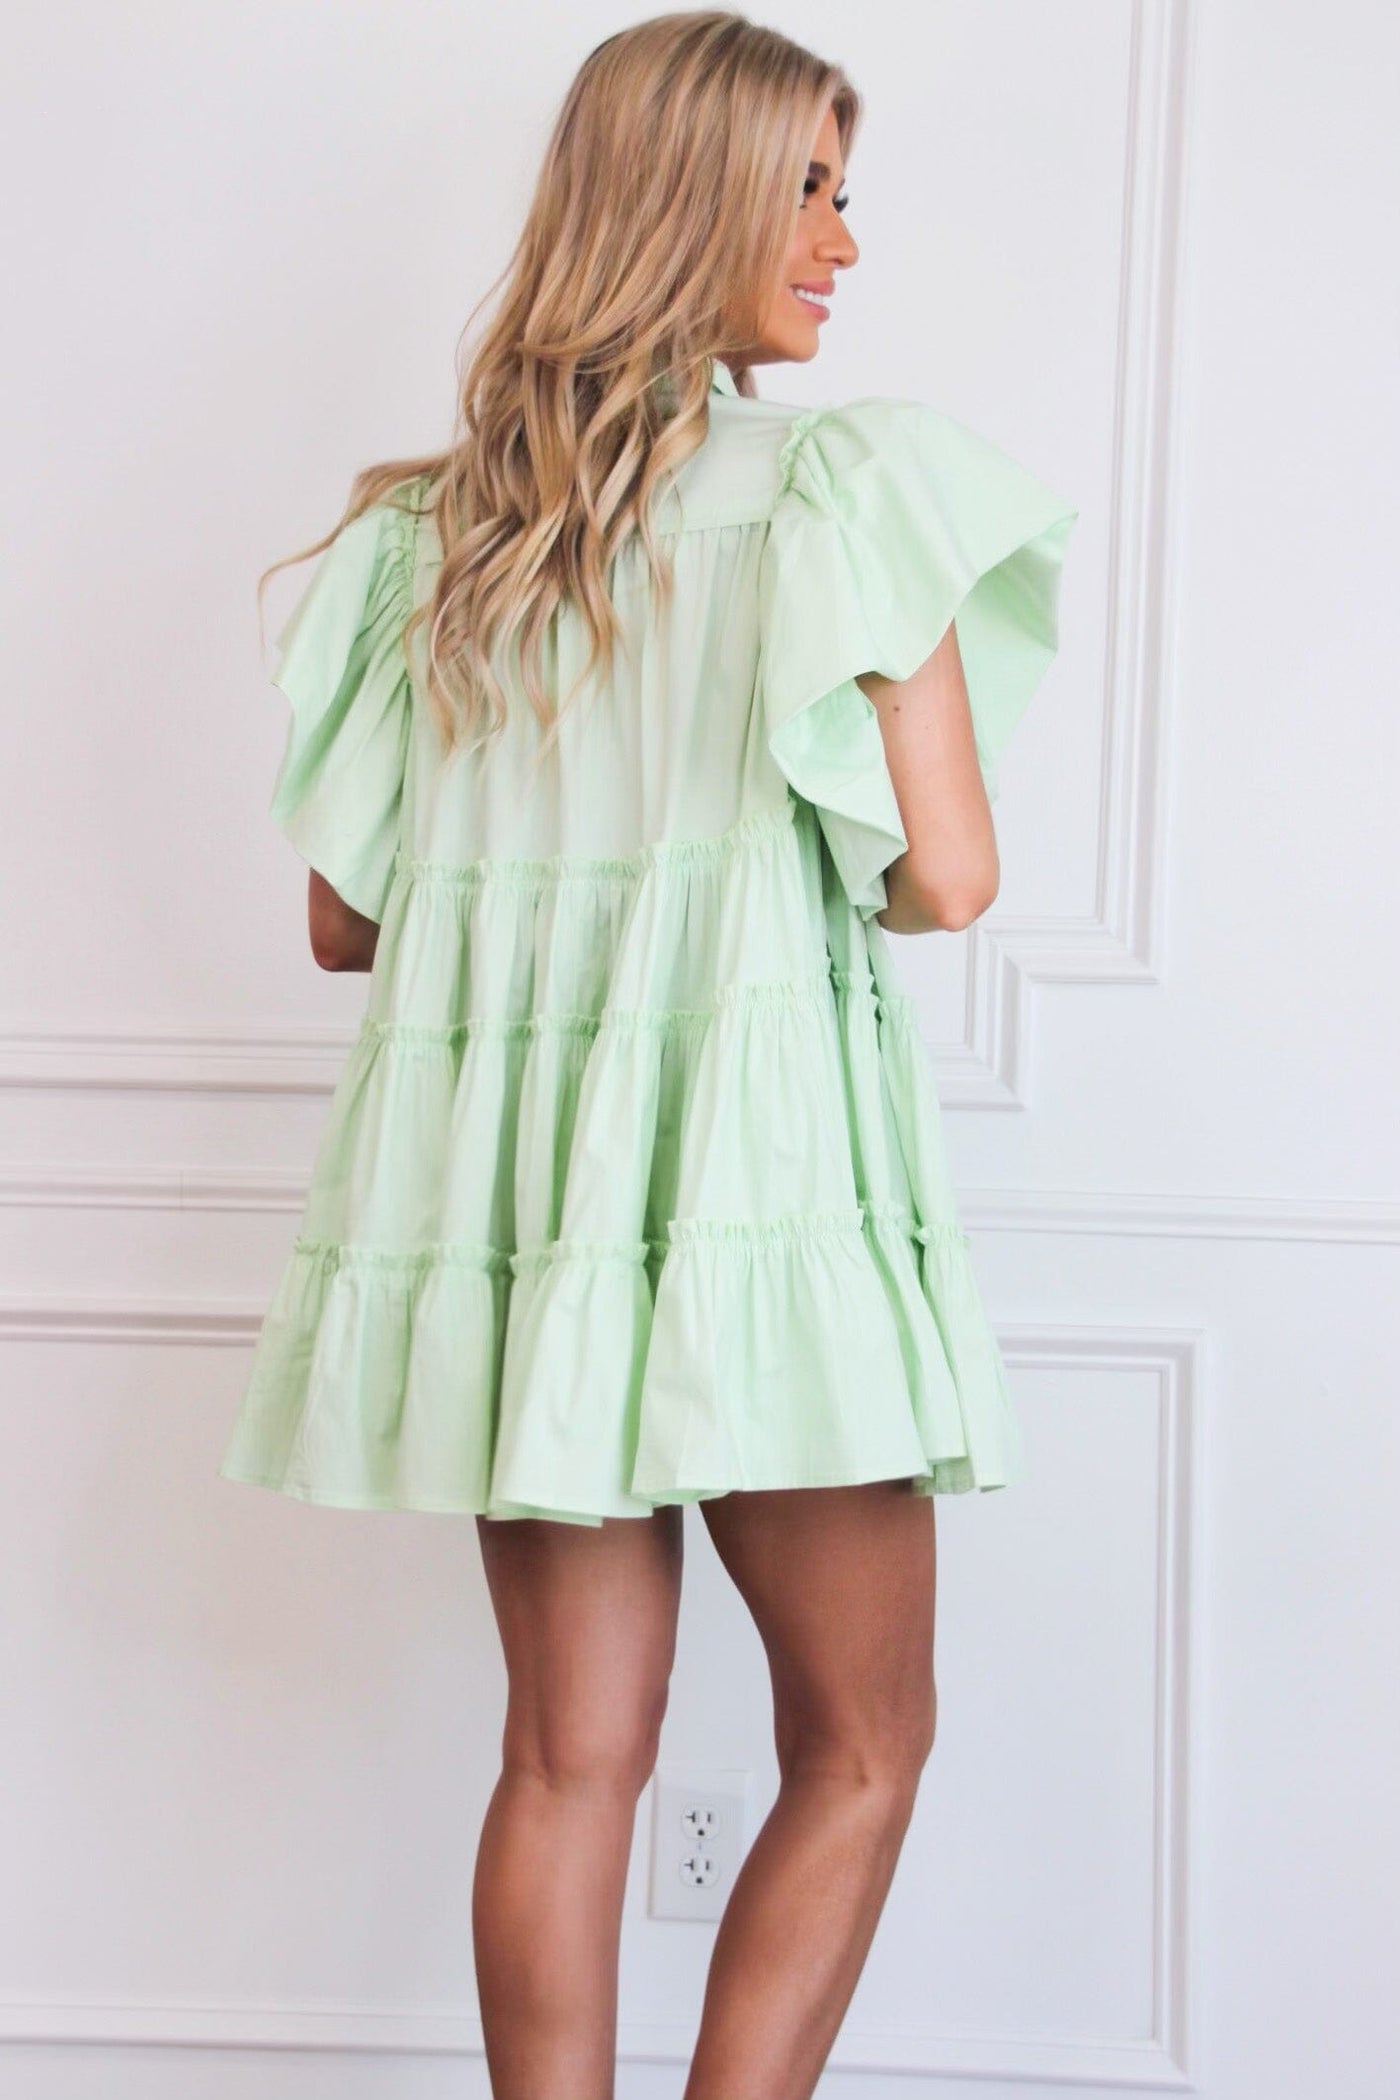 Free Spirit Dress: Light Green - Bella and Bloom Boutique